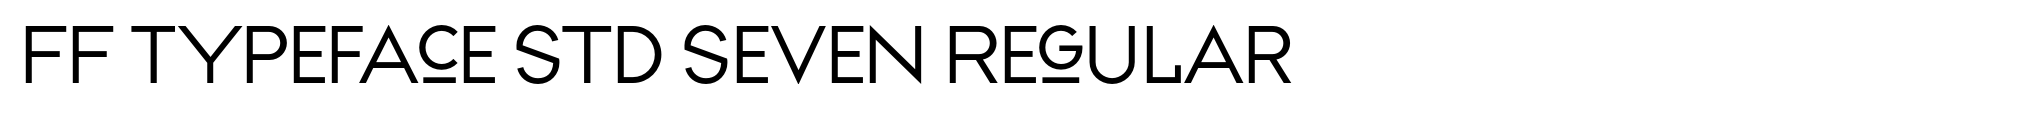 FF Typeface Std Seven Regular image